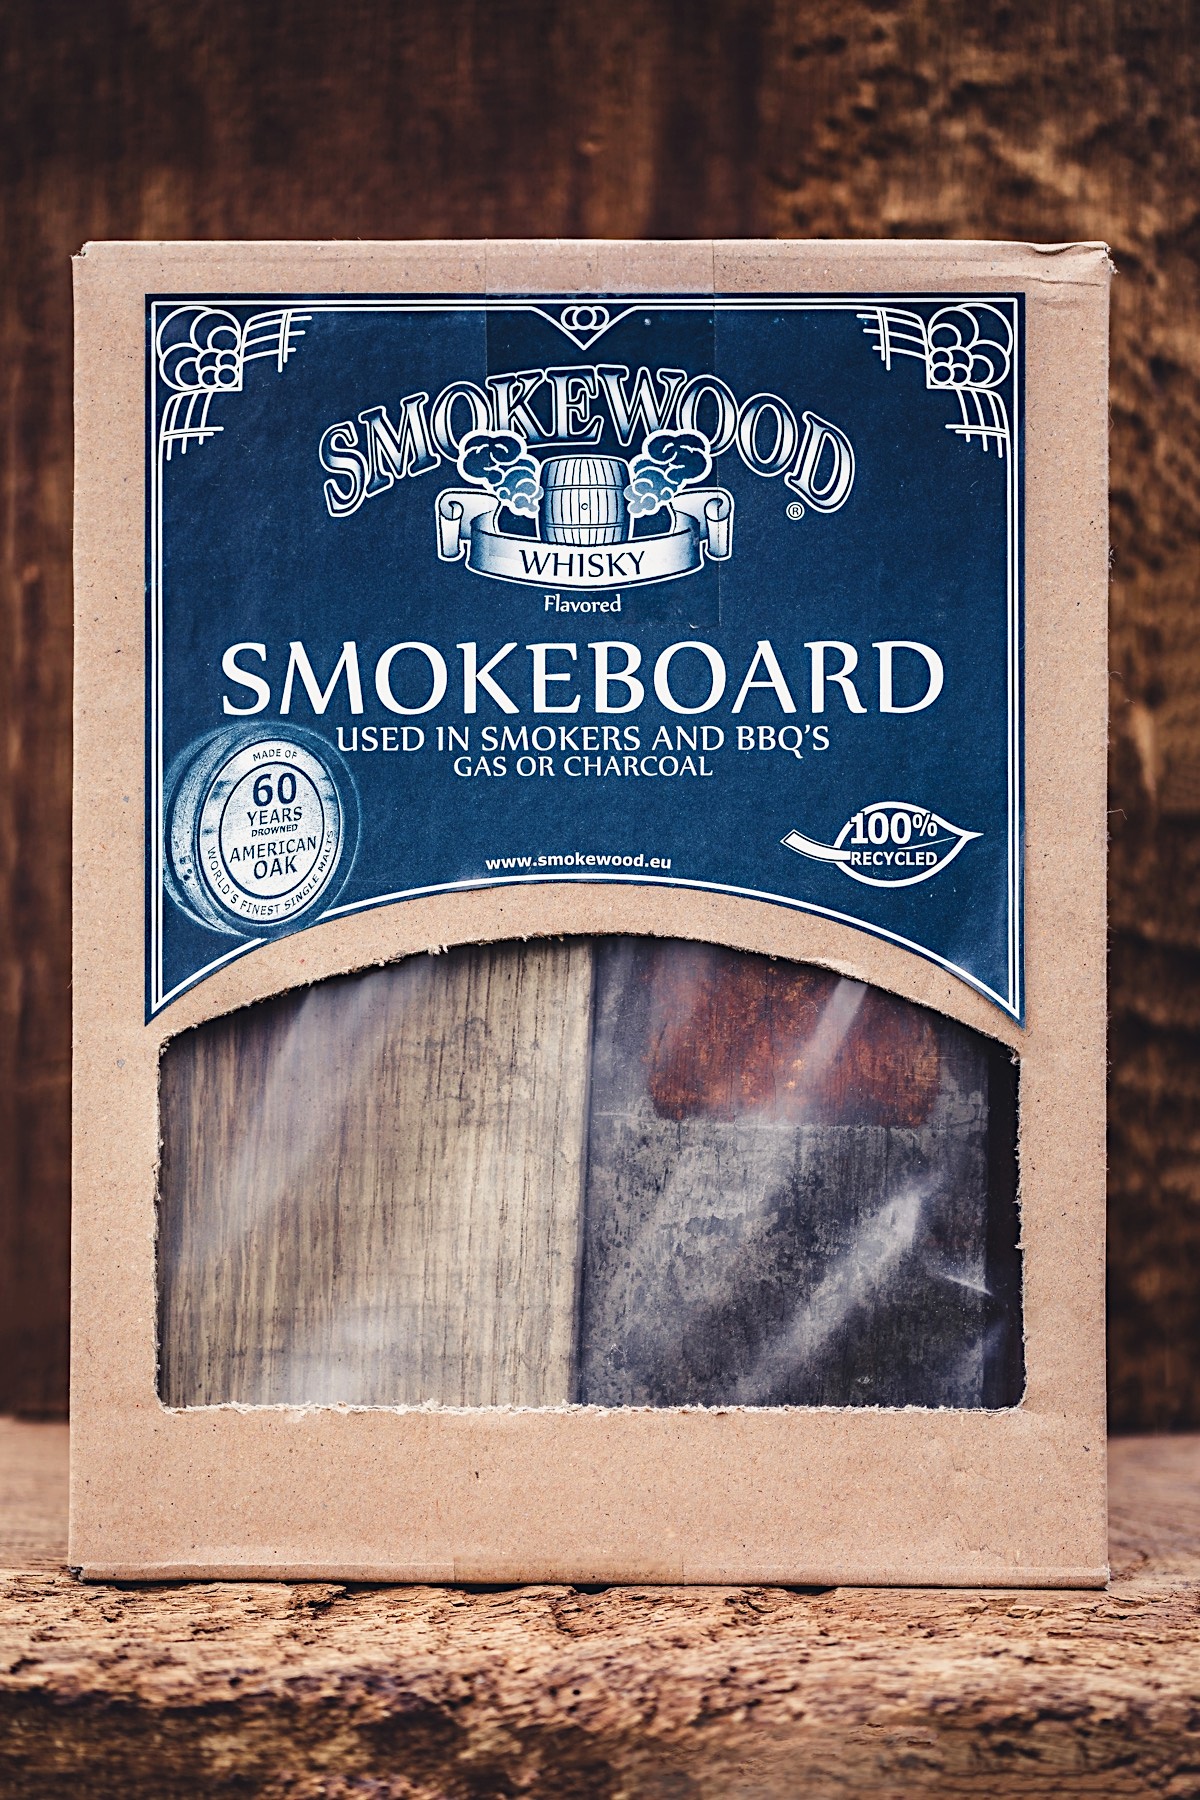 Smokewood Smokeboards Whisky (e 1000 g)